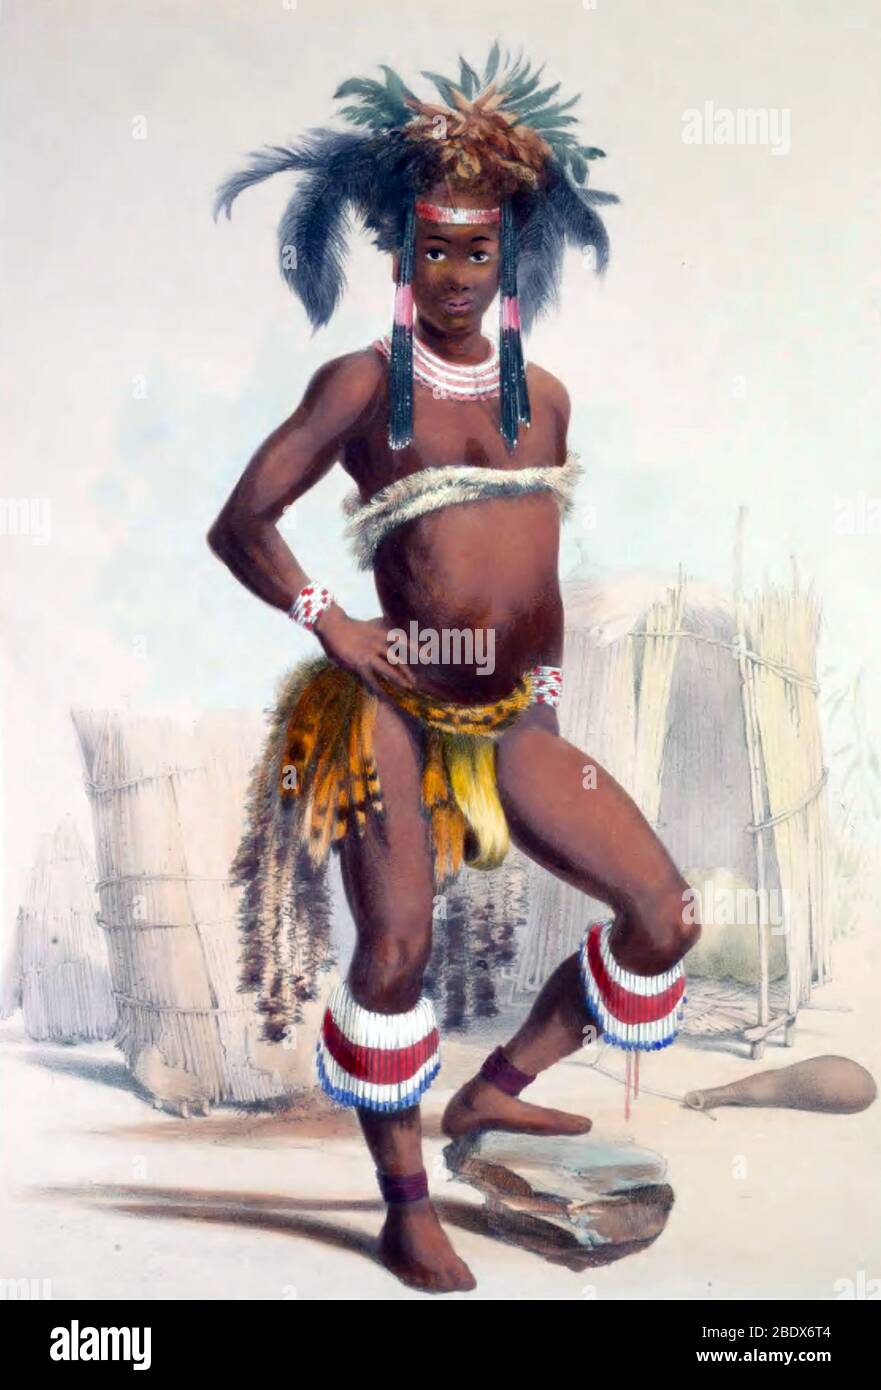 South Africa, Zulu Warrior Dance Costume, 1840s Stock Photo